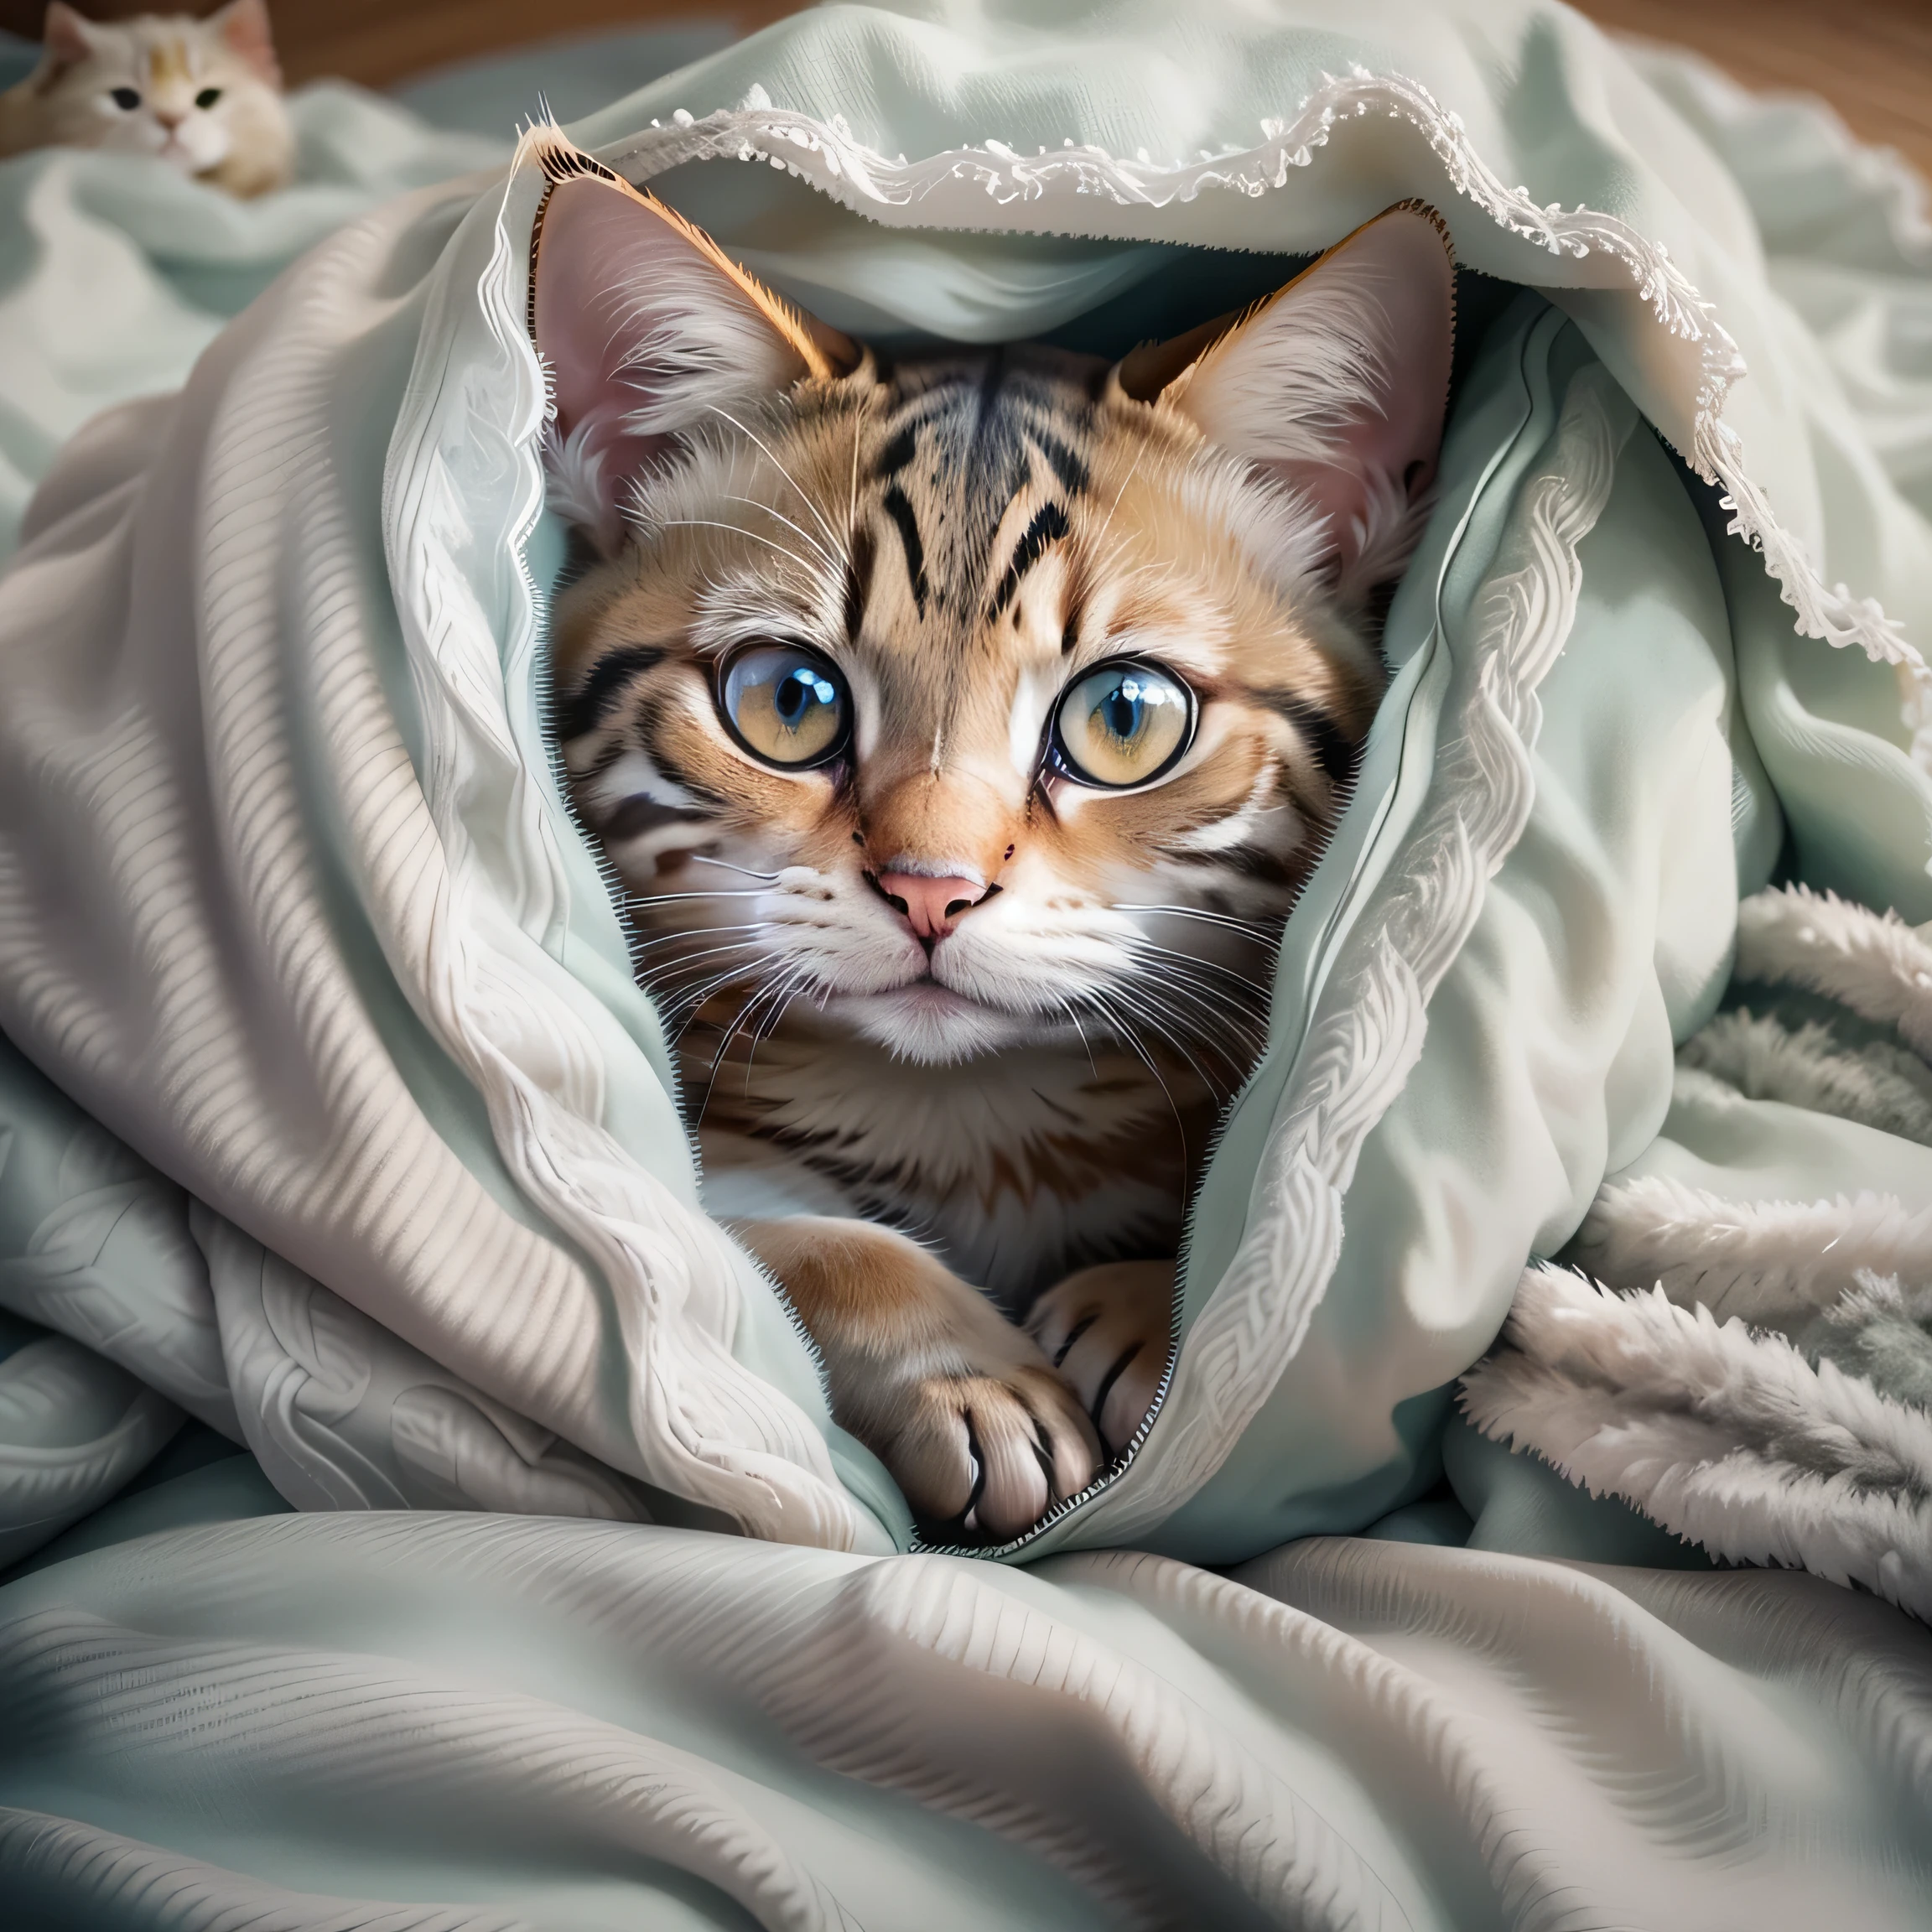 there is a cat that is 隱瞞 under a blanket, 蜷縮在棉被下面, 隱瞞, 凝視著你, 蓋在毯子下很舒服, 貓圖片, 蓋上毯子, Cute 貓圖片, 害怕的表情, 病貓躺在臥室裡, 看著相機, 有着可爱的眼睛, 成立, 銳利的眼睛, 可愛的貓